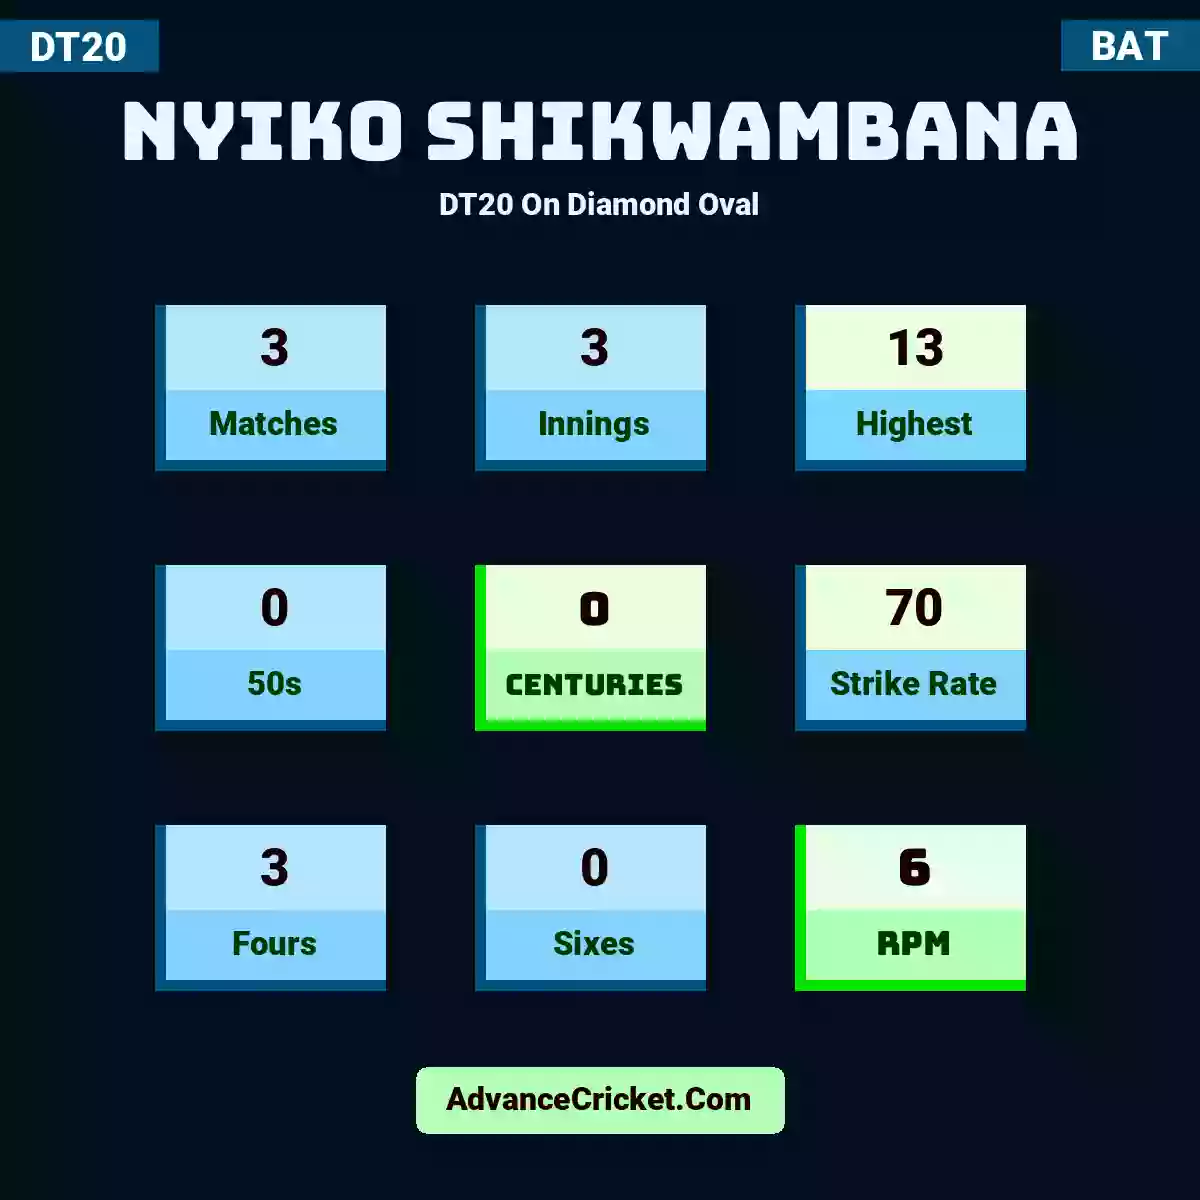 Nyiko Shikwambana DT20  On Diamond Oval, Nyiko Shikwambana played 3 matches, scored 13 runs as highest, 0 half-centuries, and 0 centuries, with a strike rate of 70. N.Shikwambana hit 3 fours and 0 sixes, with an RPM of 6.